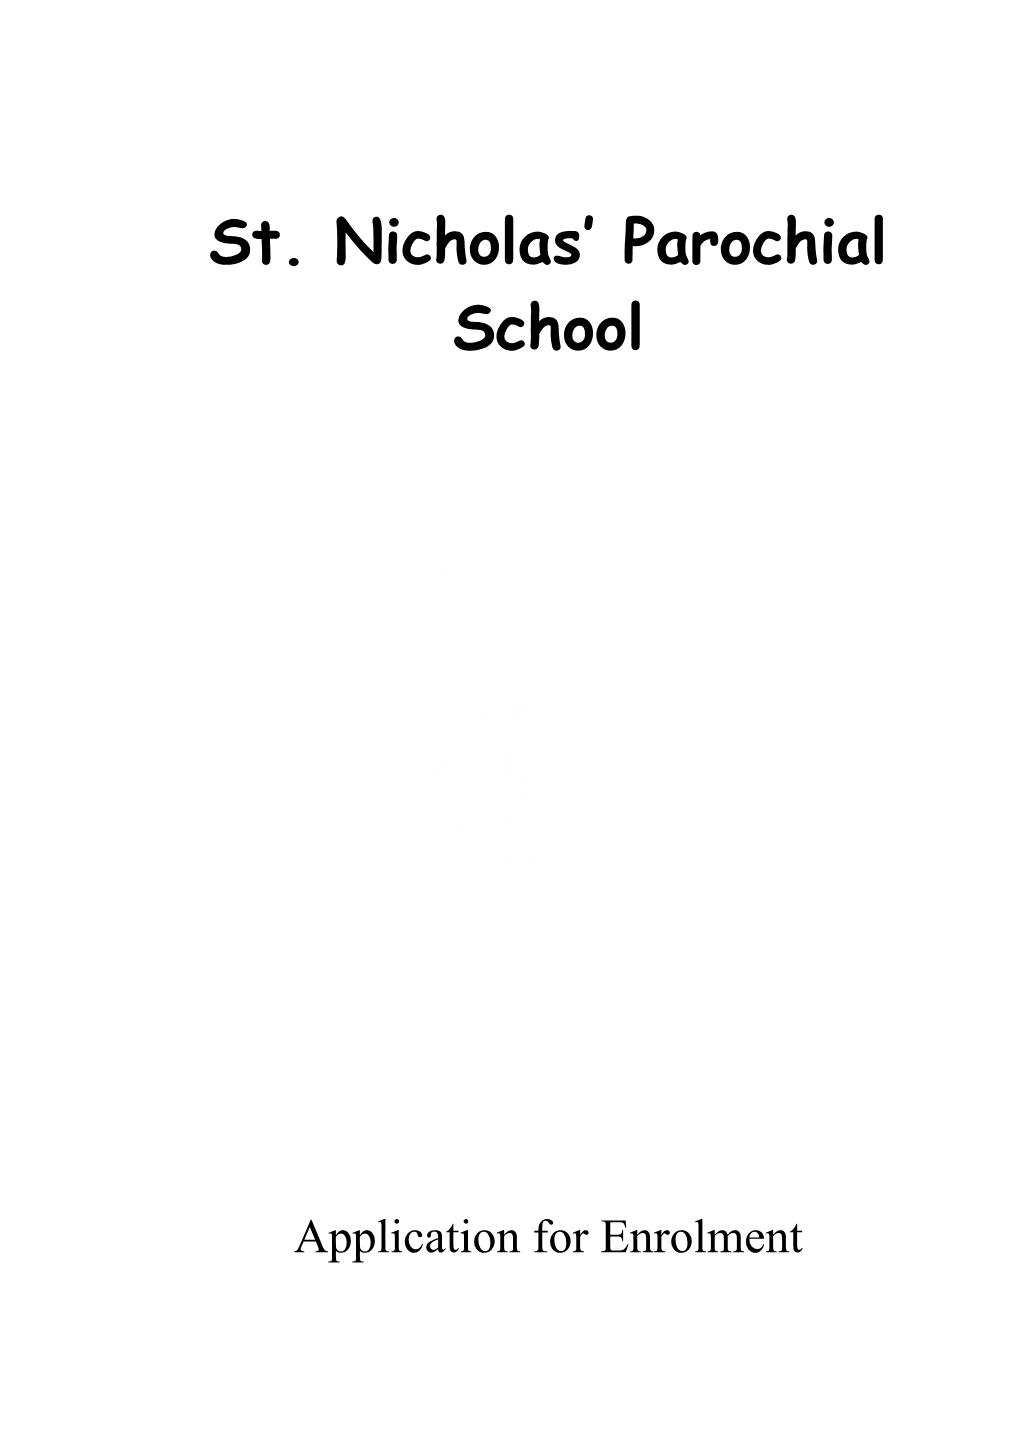 St. Nicholas Parochial School